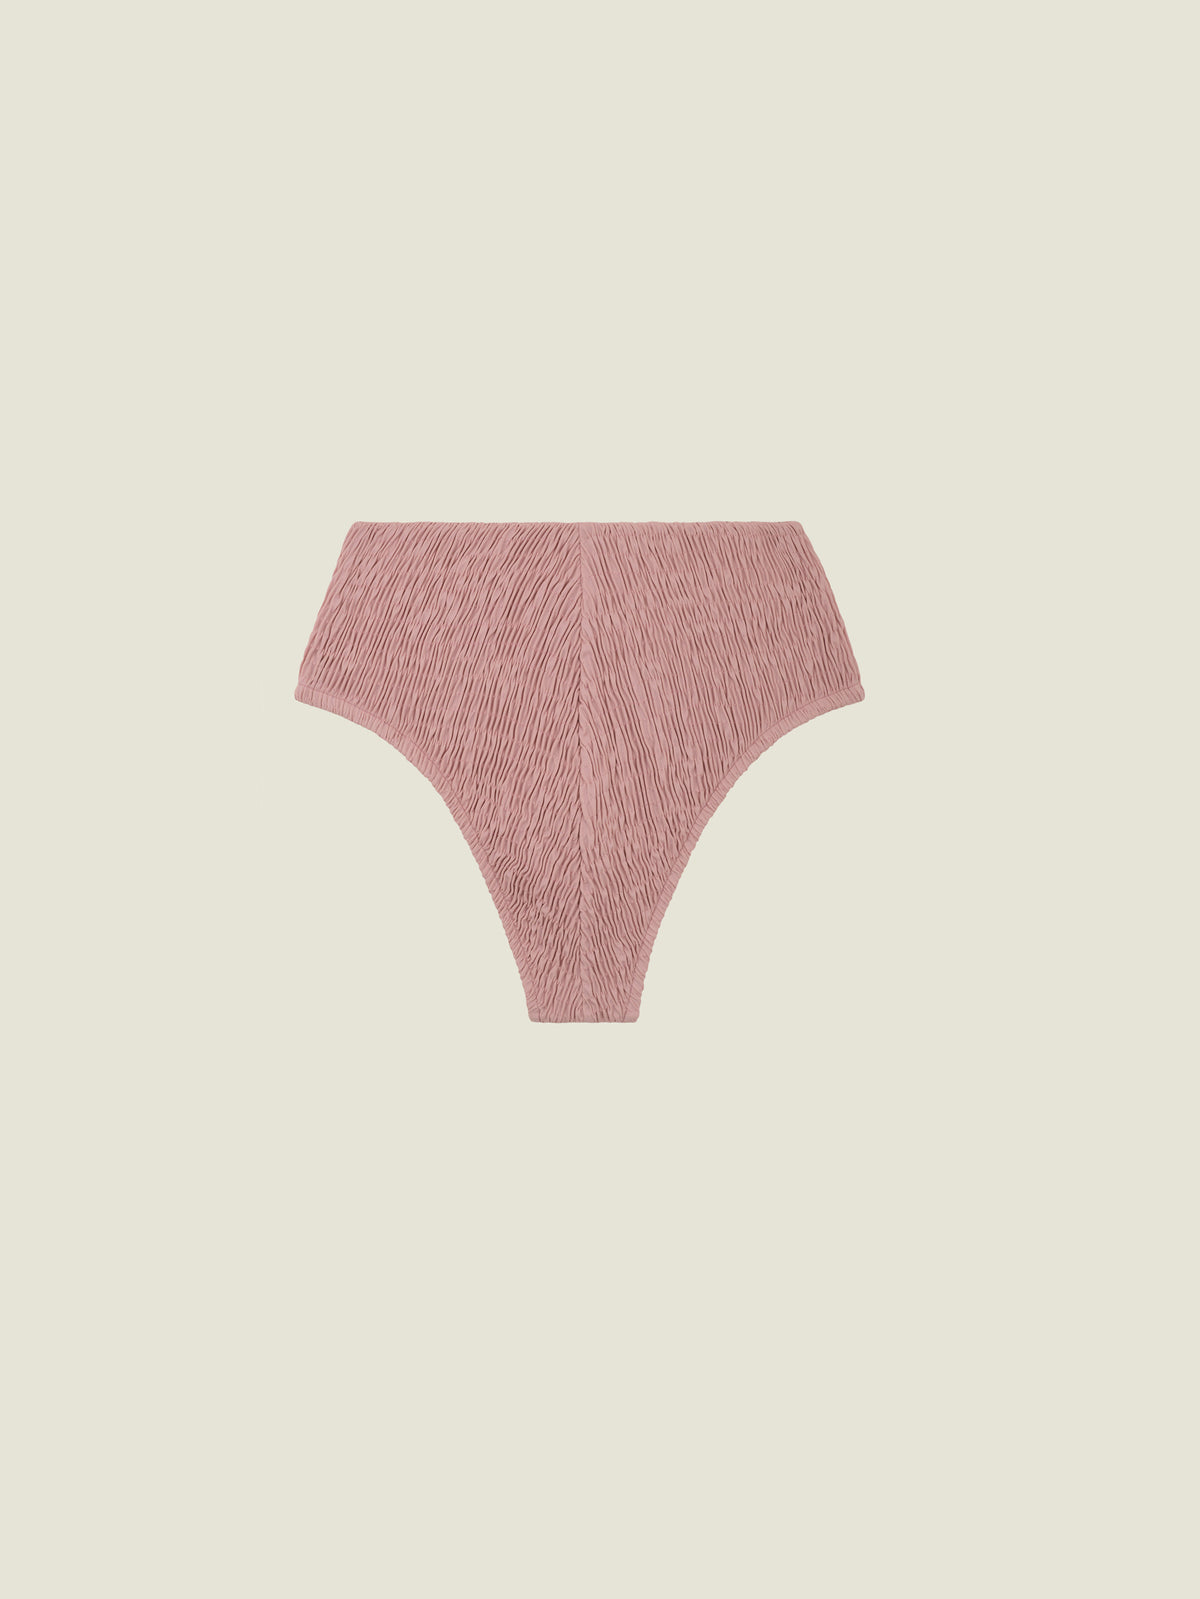 Hydra - bikini - Bottom - Powder pink